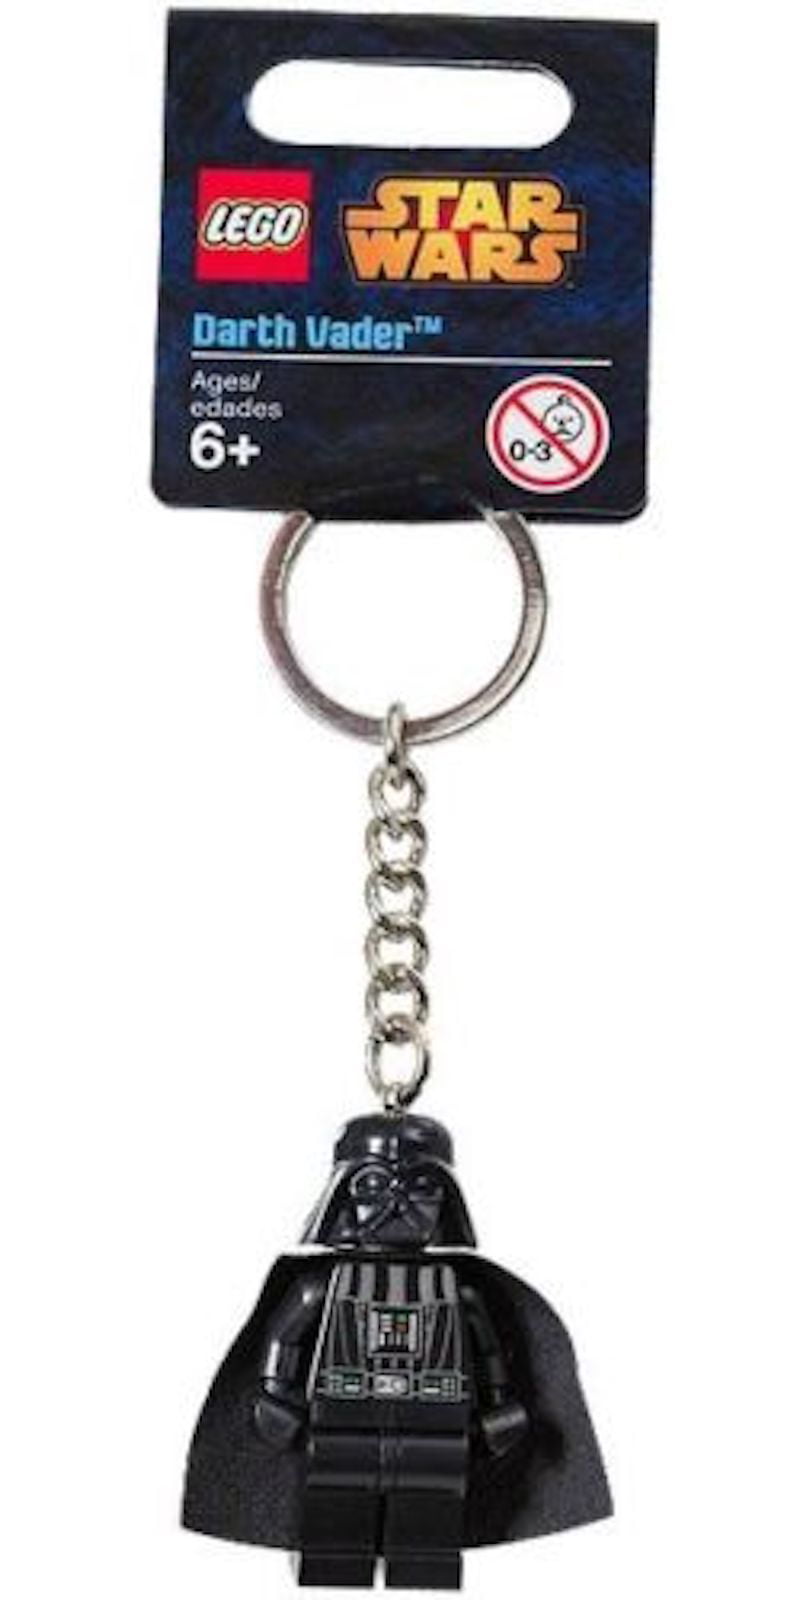 LEGO Star Wars Darth Vader Minifigure Keychain Keyring 850996 for sale online 